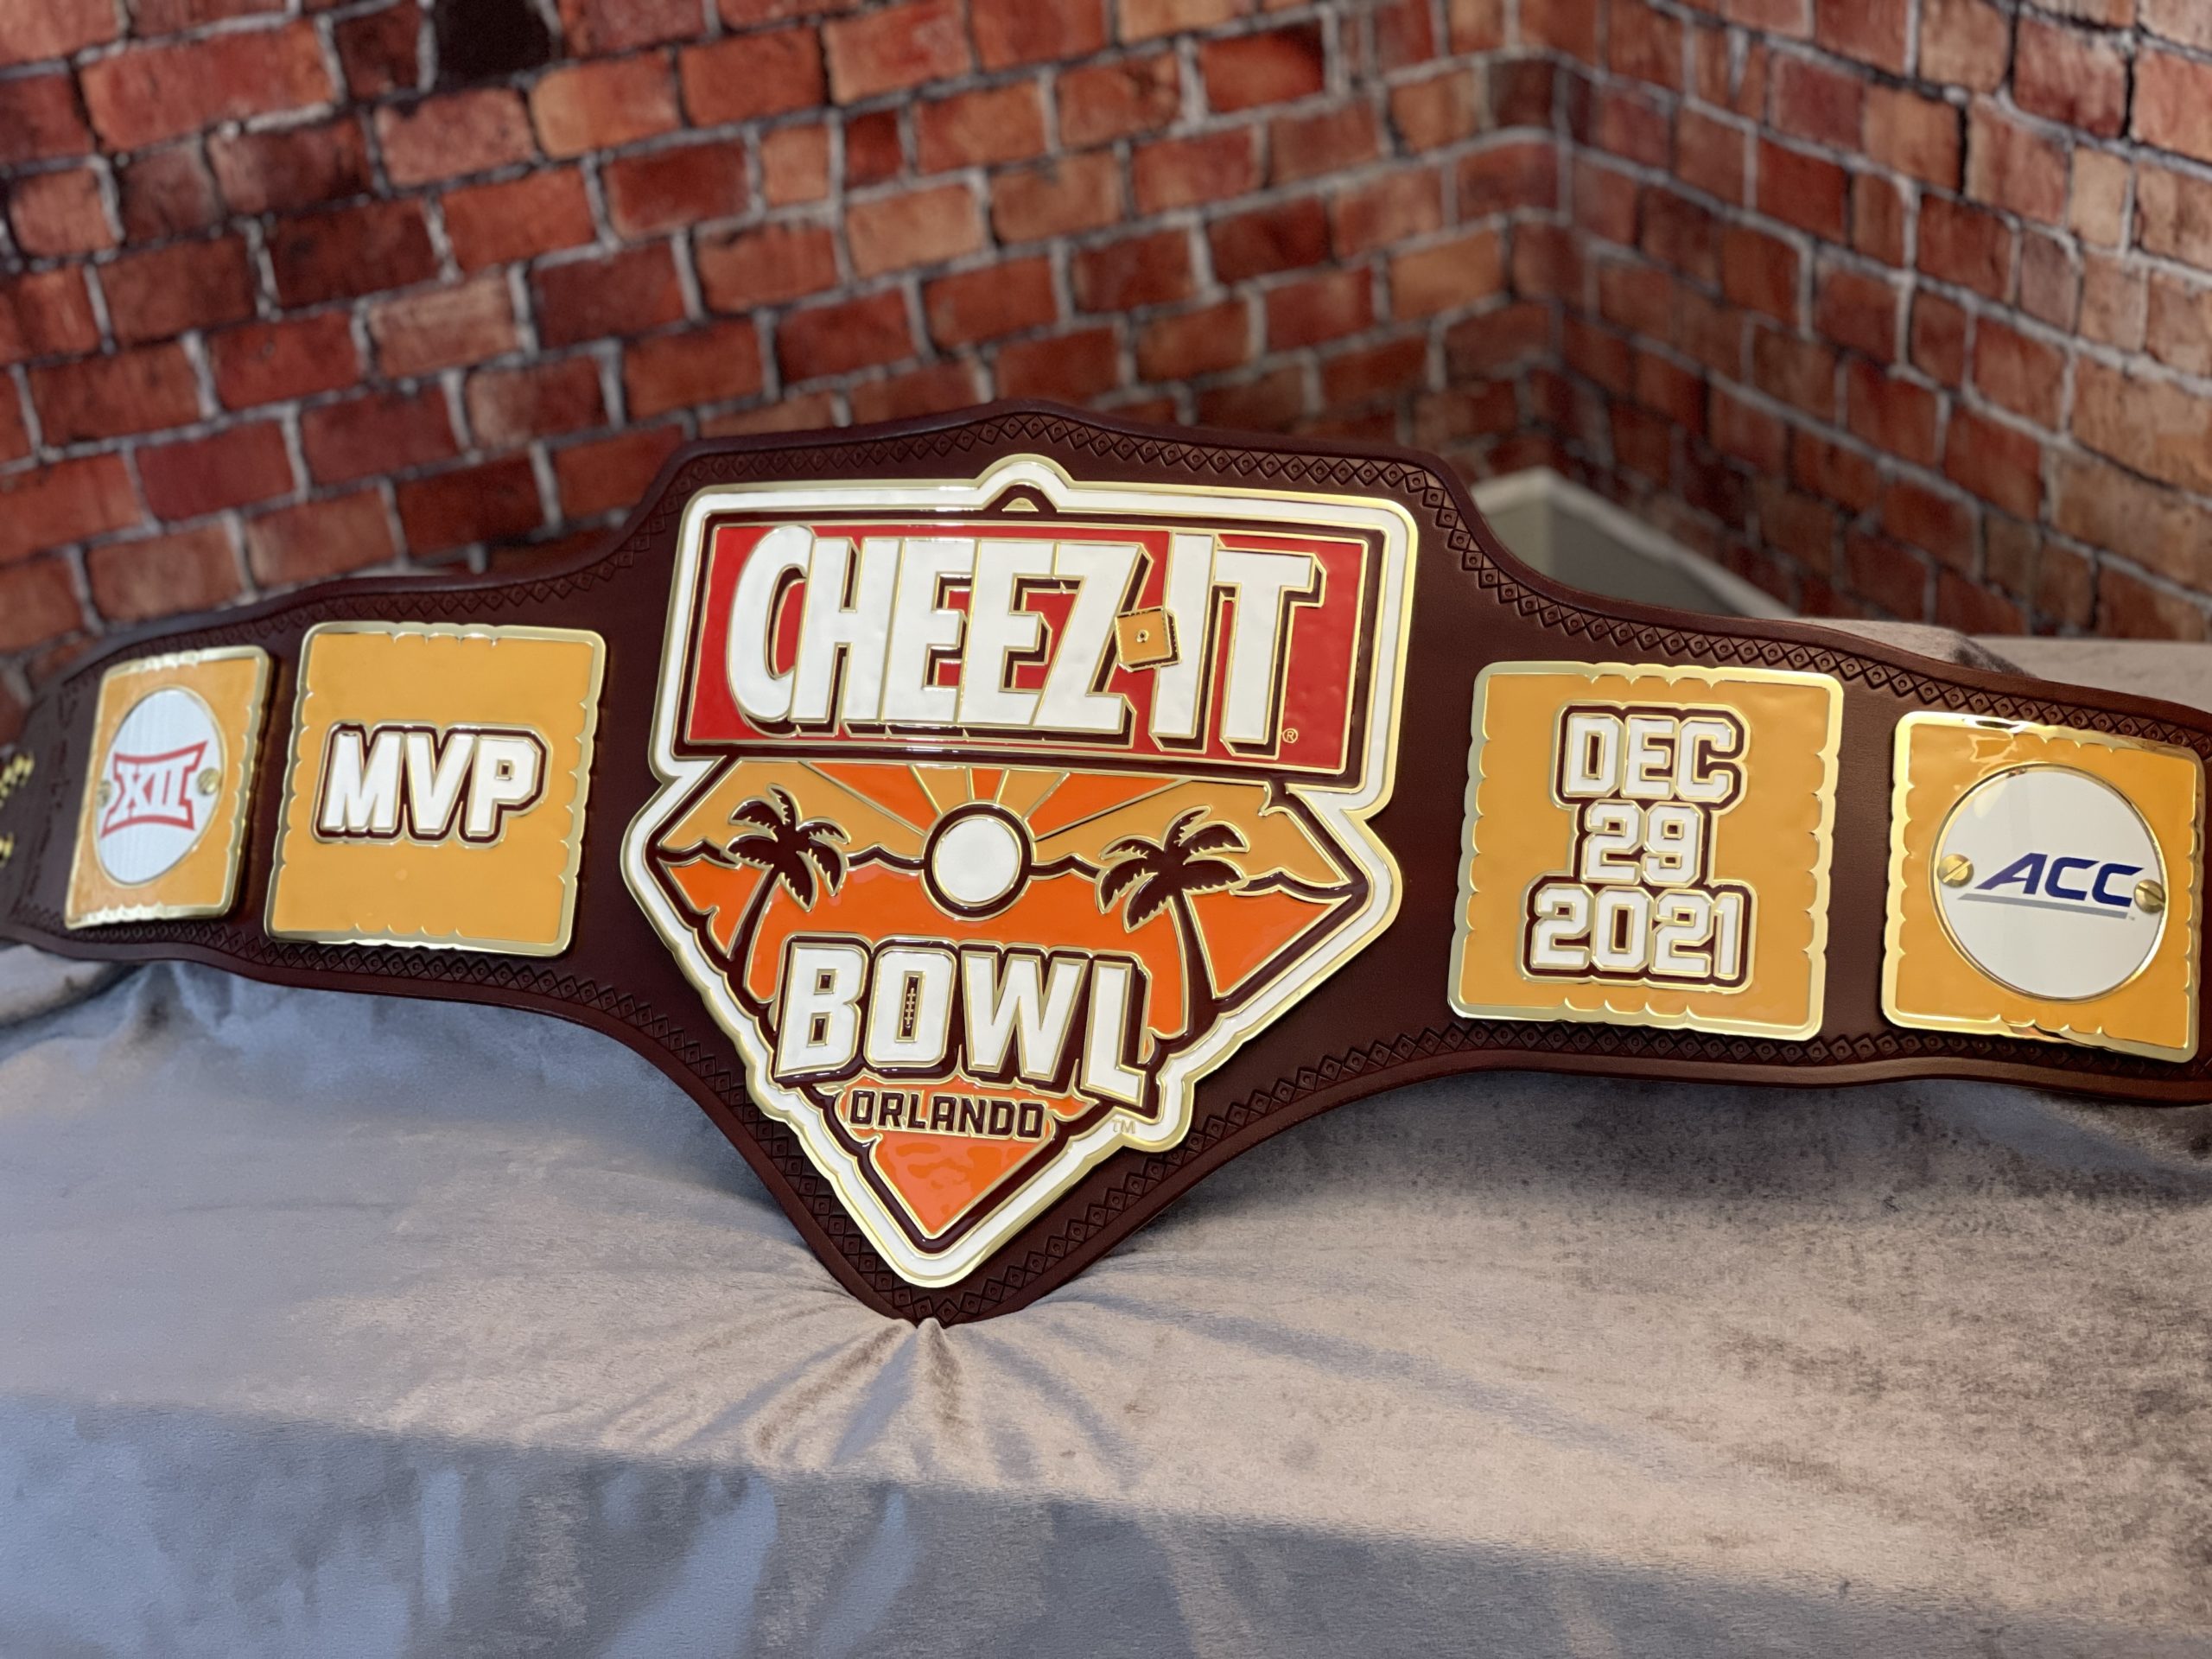 Cheez It Bowl Championship 